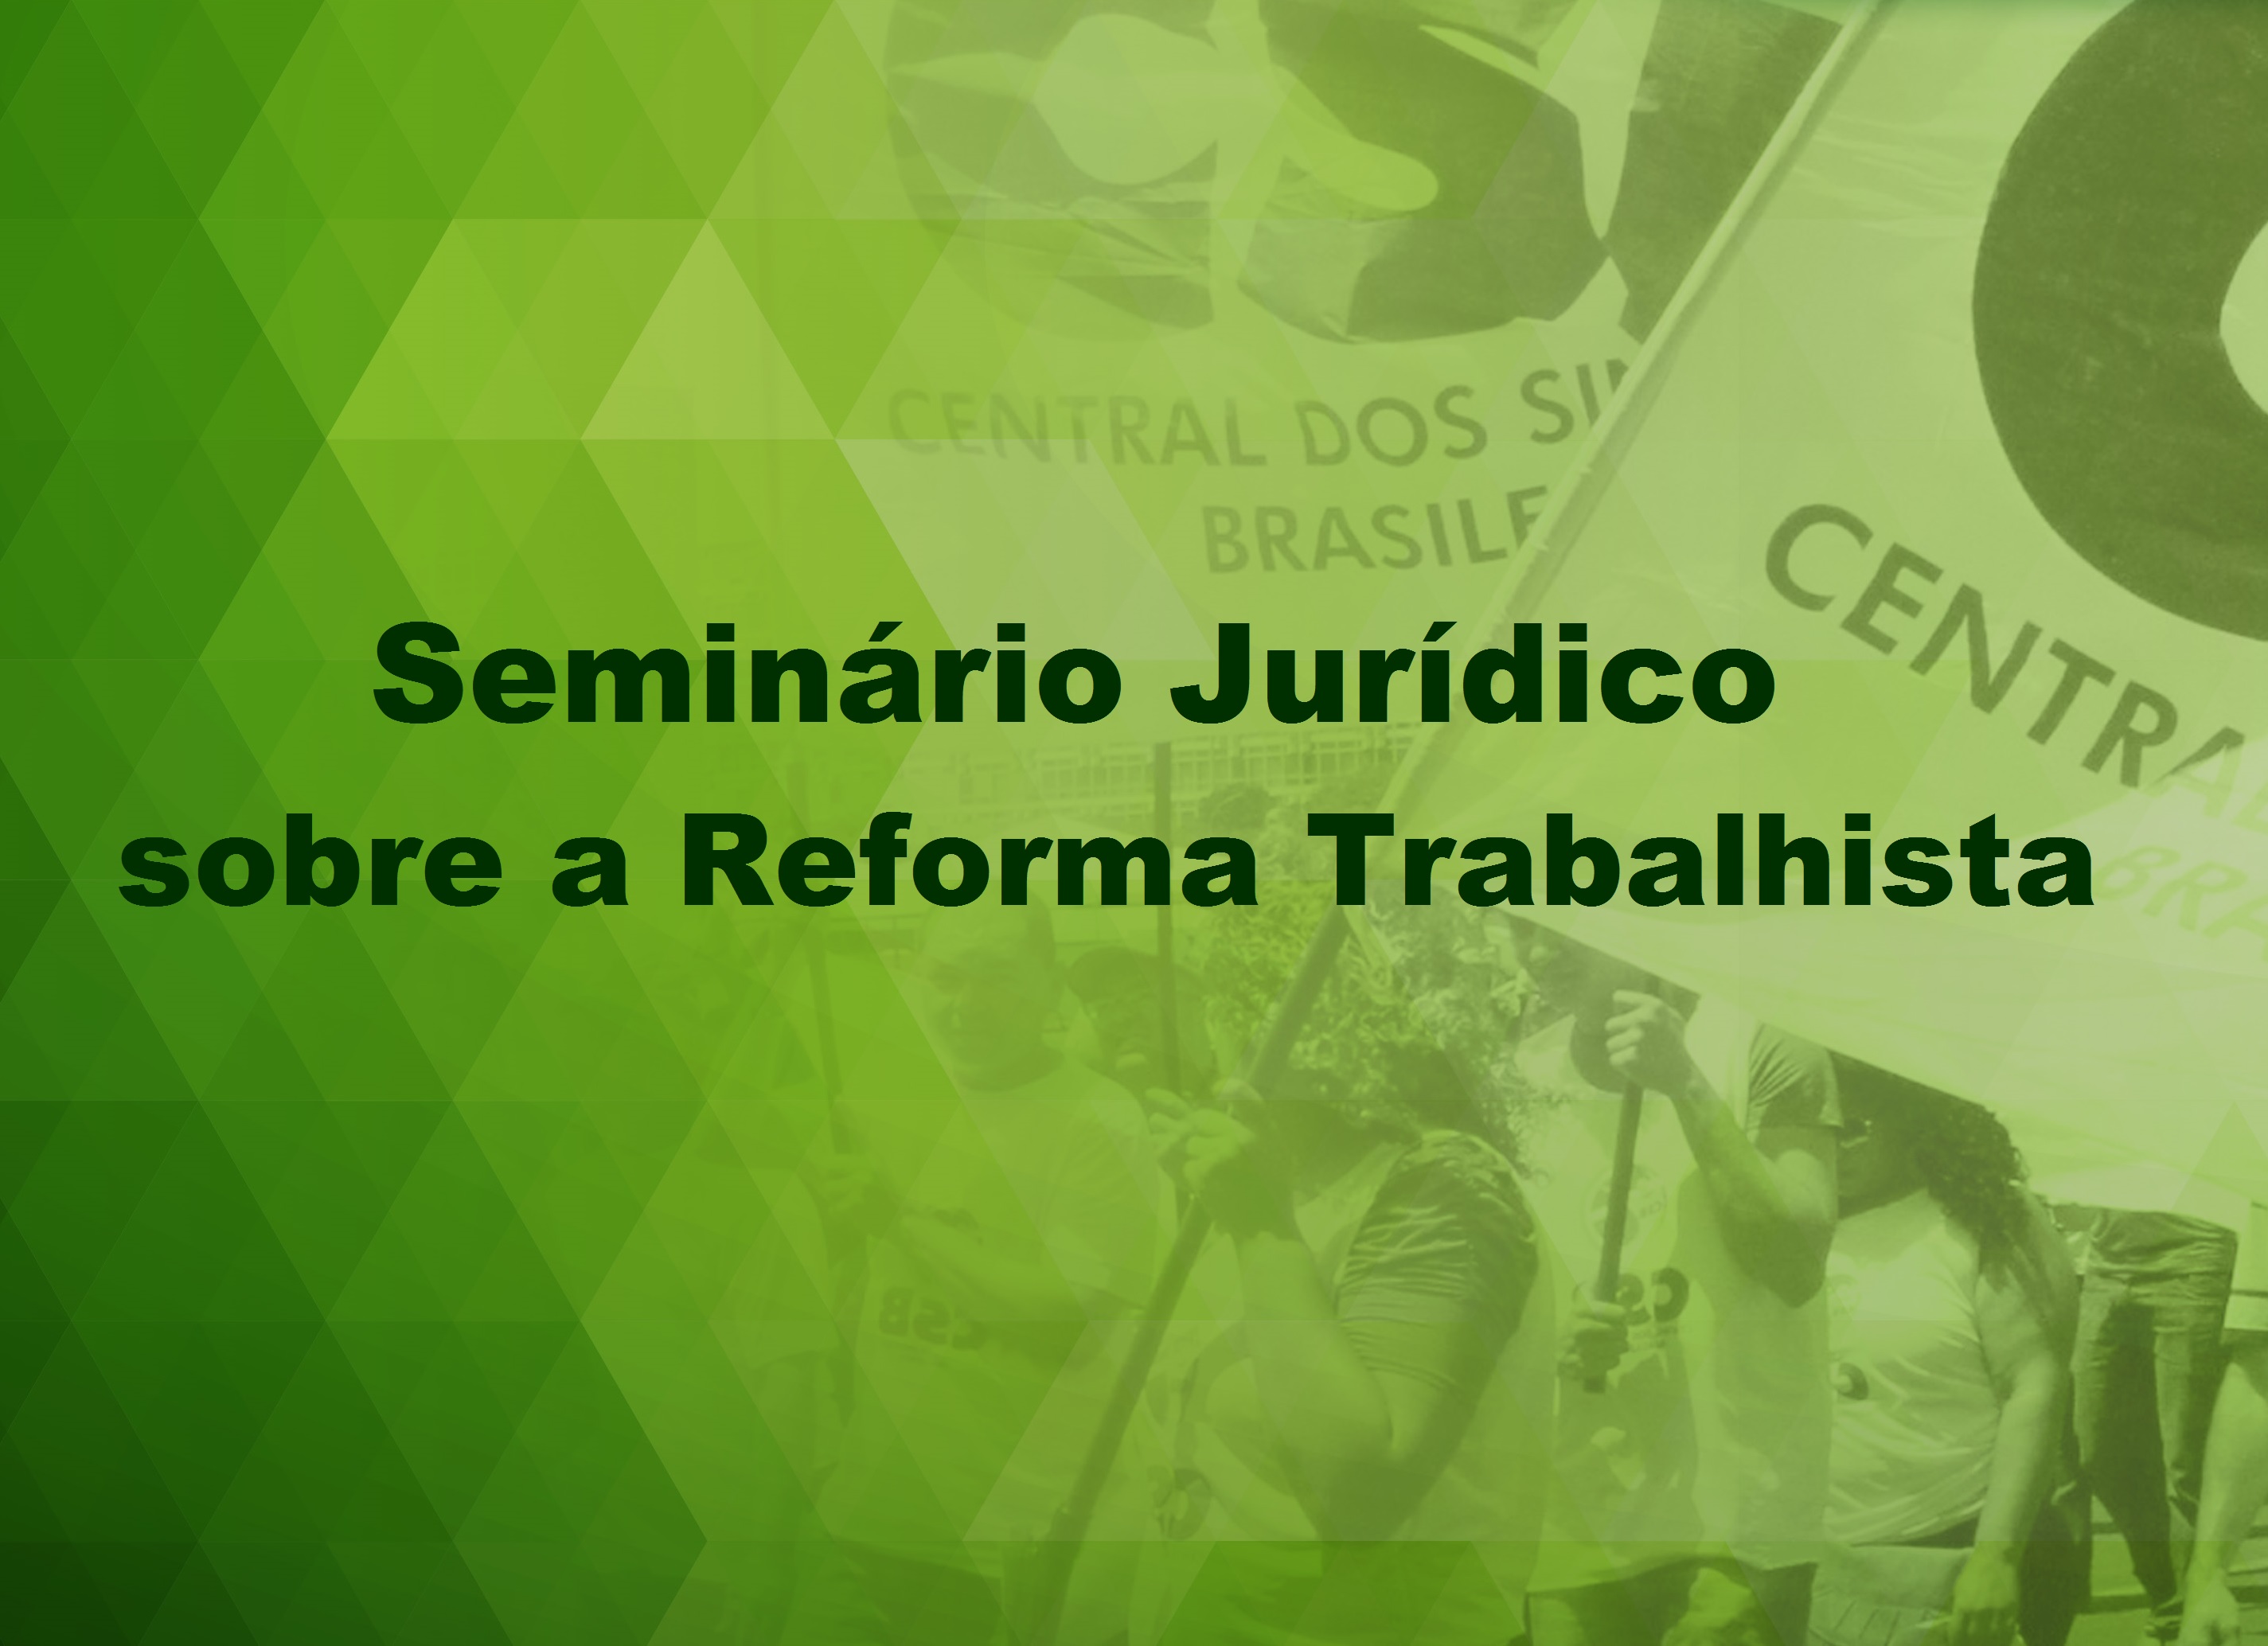 CSB promove Seminário Jurídico sobre a Reforma Trabalhista